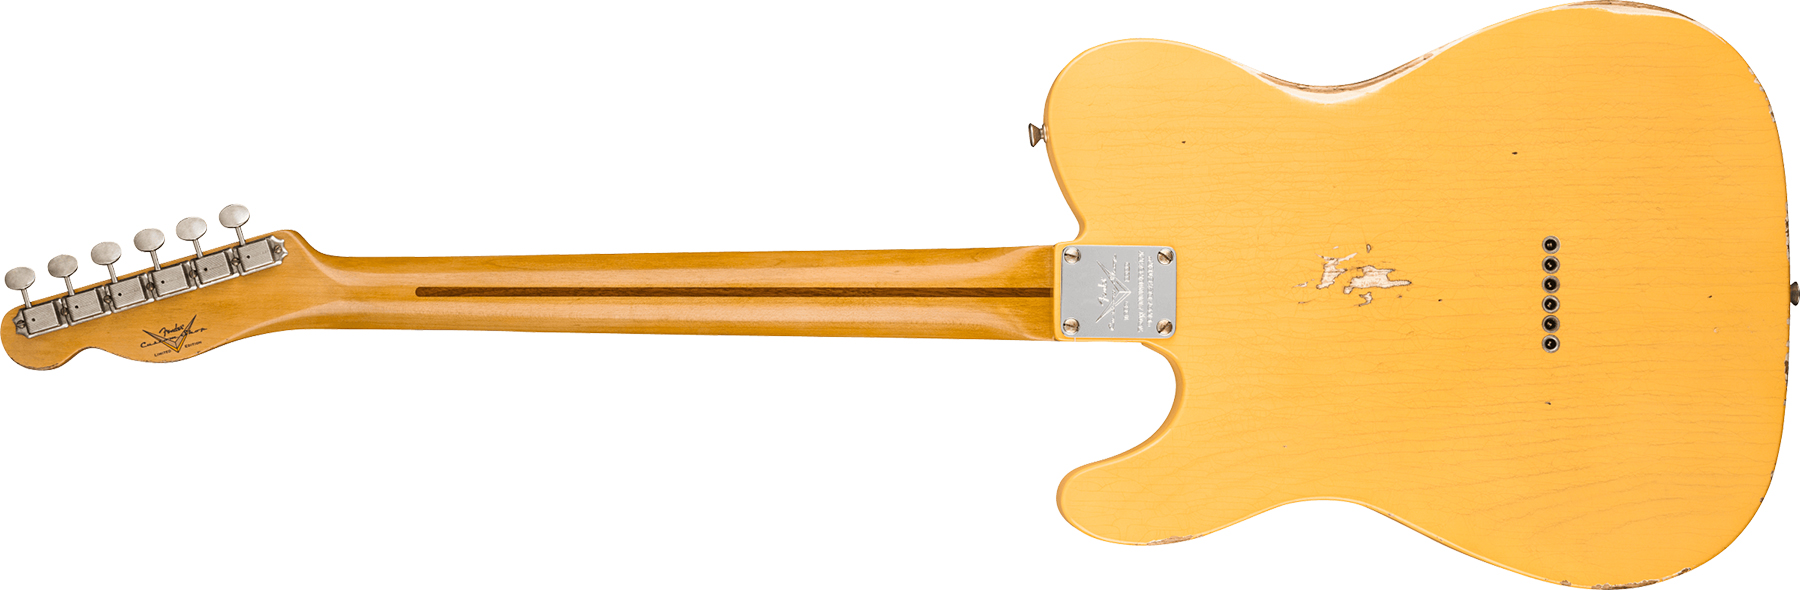 Fender Custom Shop Broadcaster Tele 70th Anniversary Ltd Mn - Relic Aged Nocaster Blonde - Guitarra eléctrica con forma de tel - Variation 1